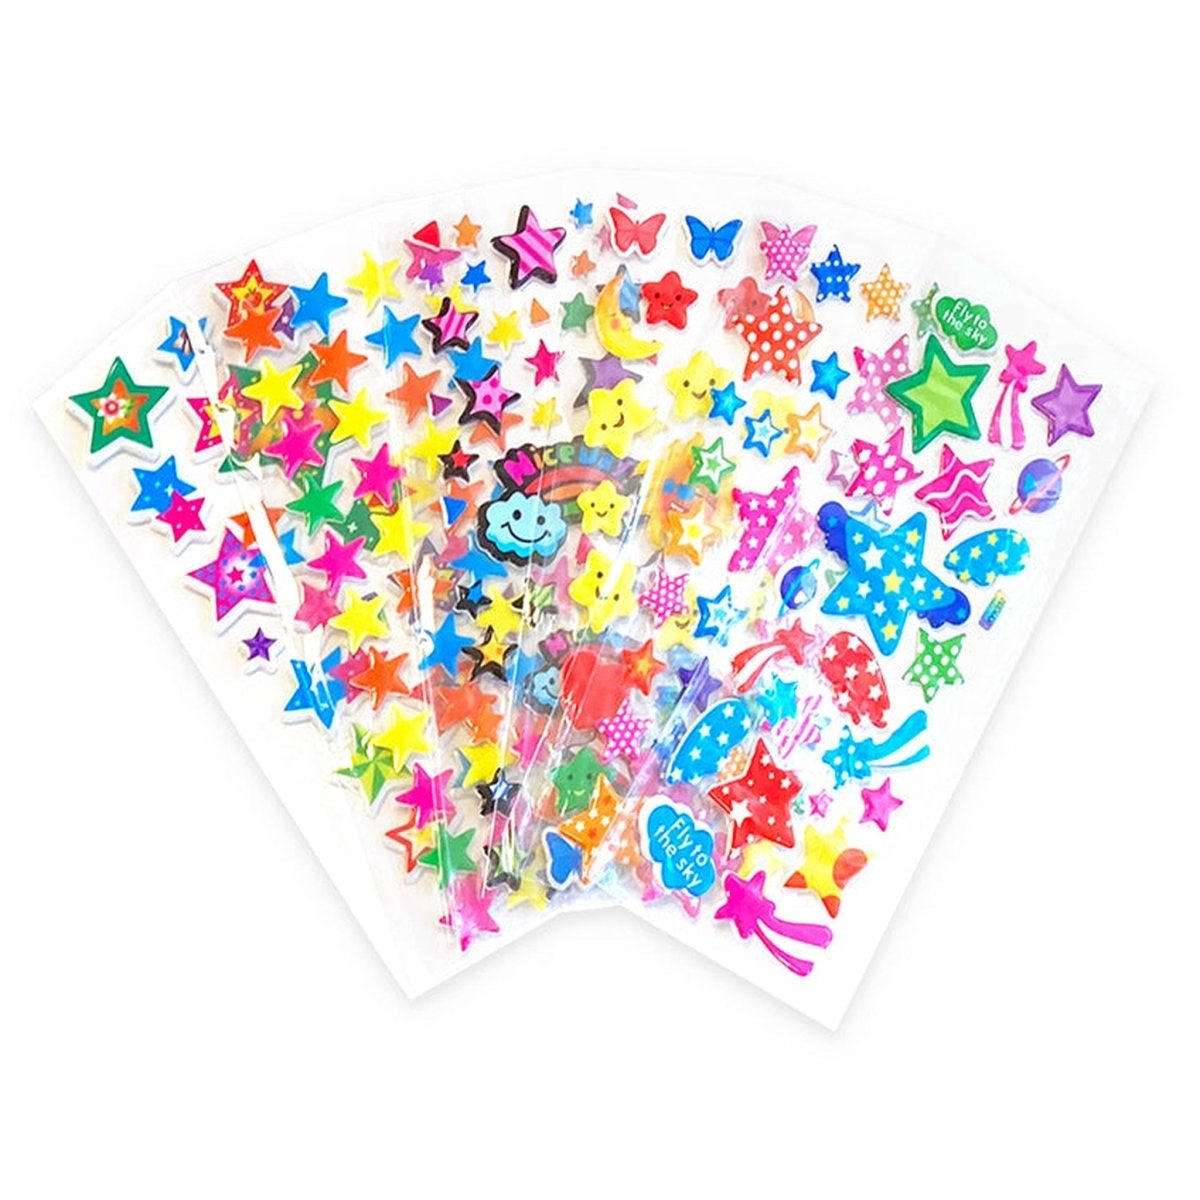 Stars Puffy Sticker Sheets - Kids Party Craft